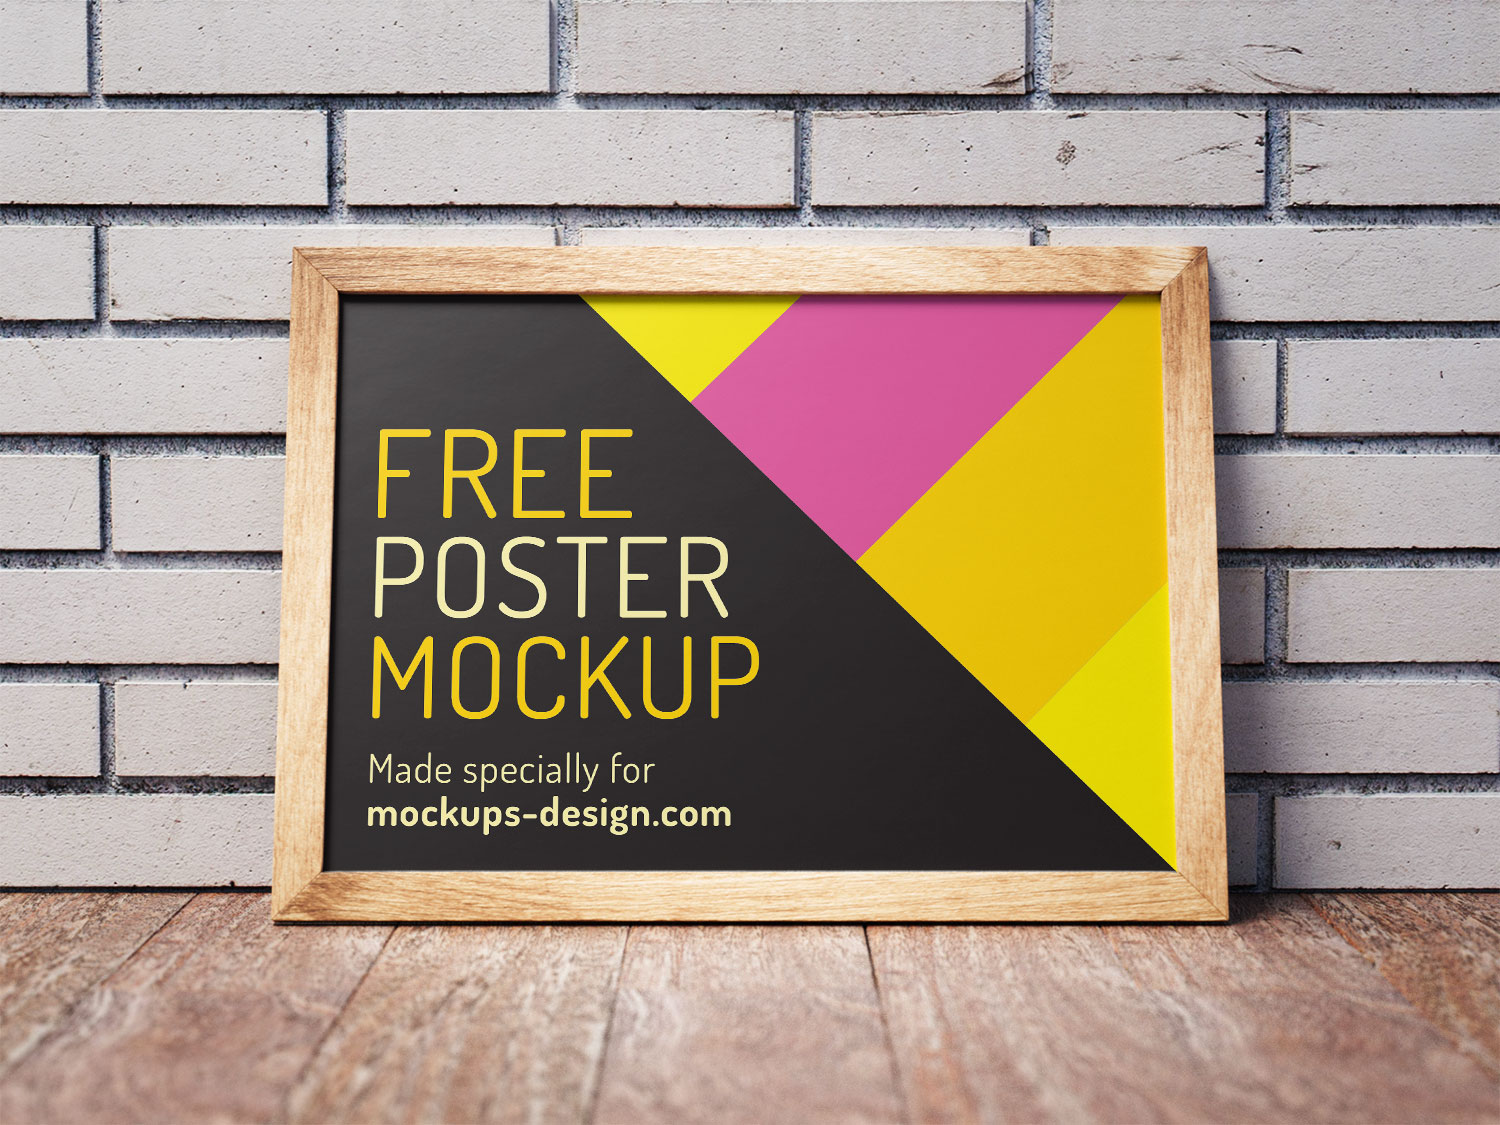 Poster Mockup Free Psd File Download 2021 Daily Mockup Images